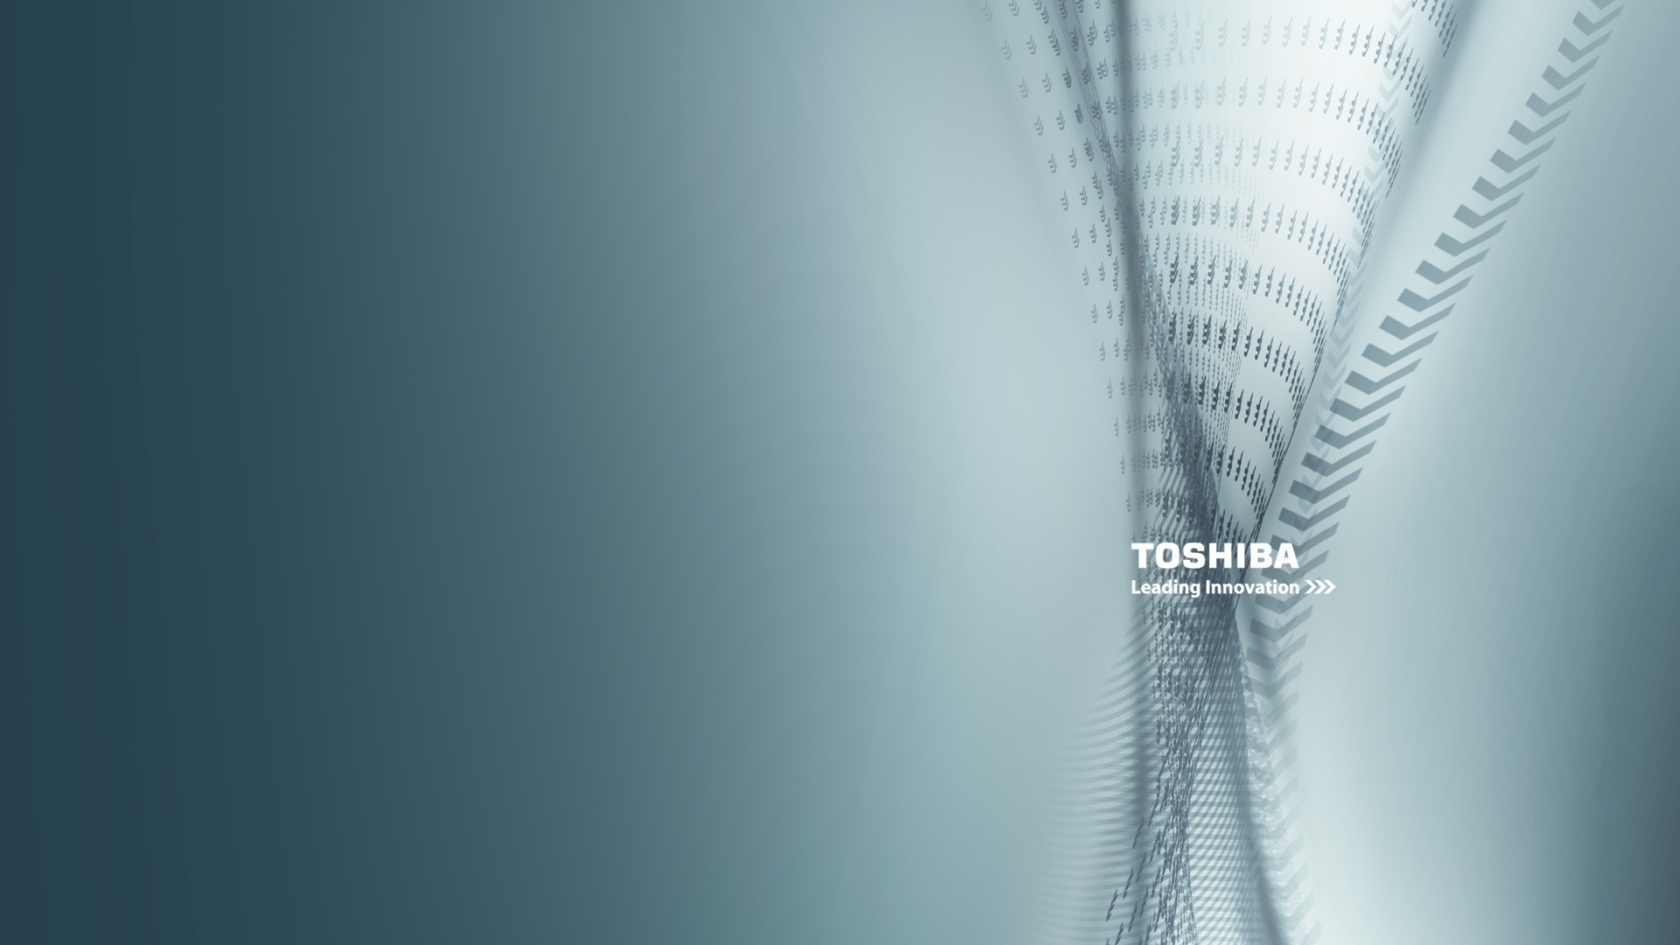 Toshiba Innovation for 1680 x 945 HDTV resolution